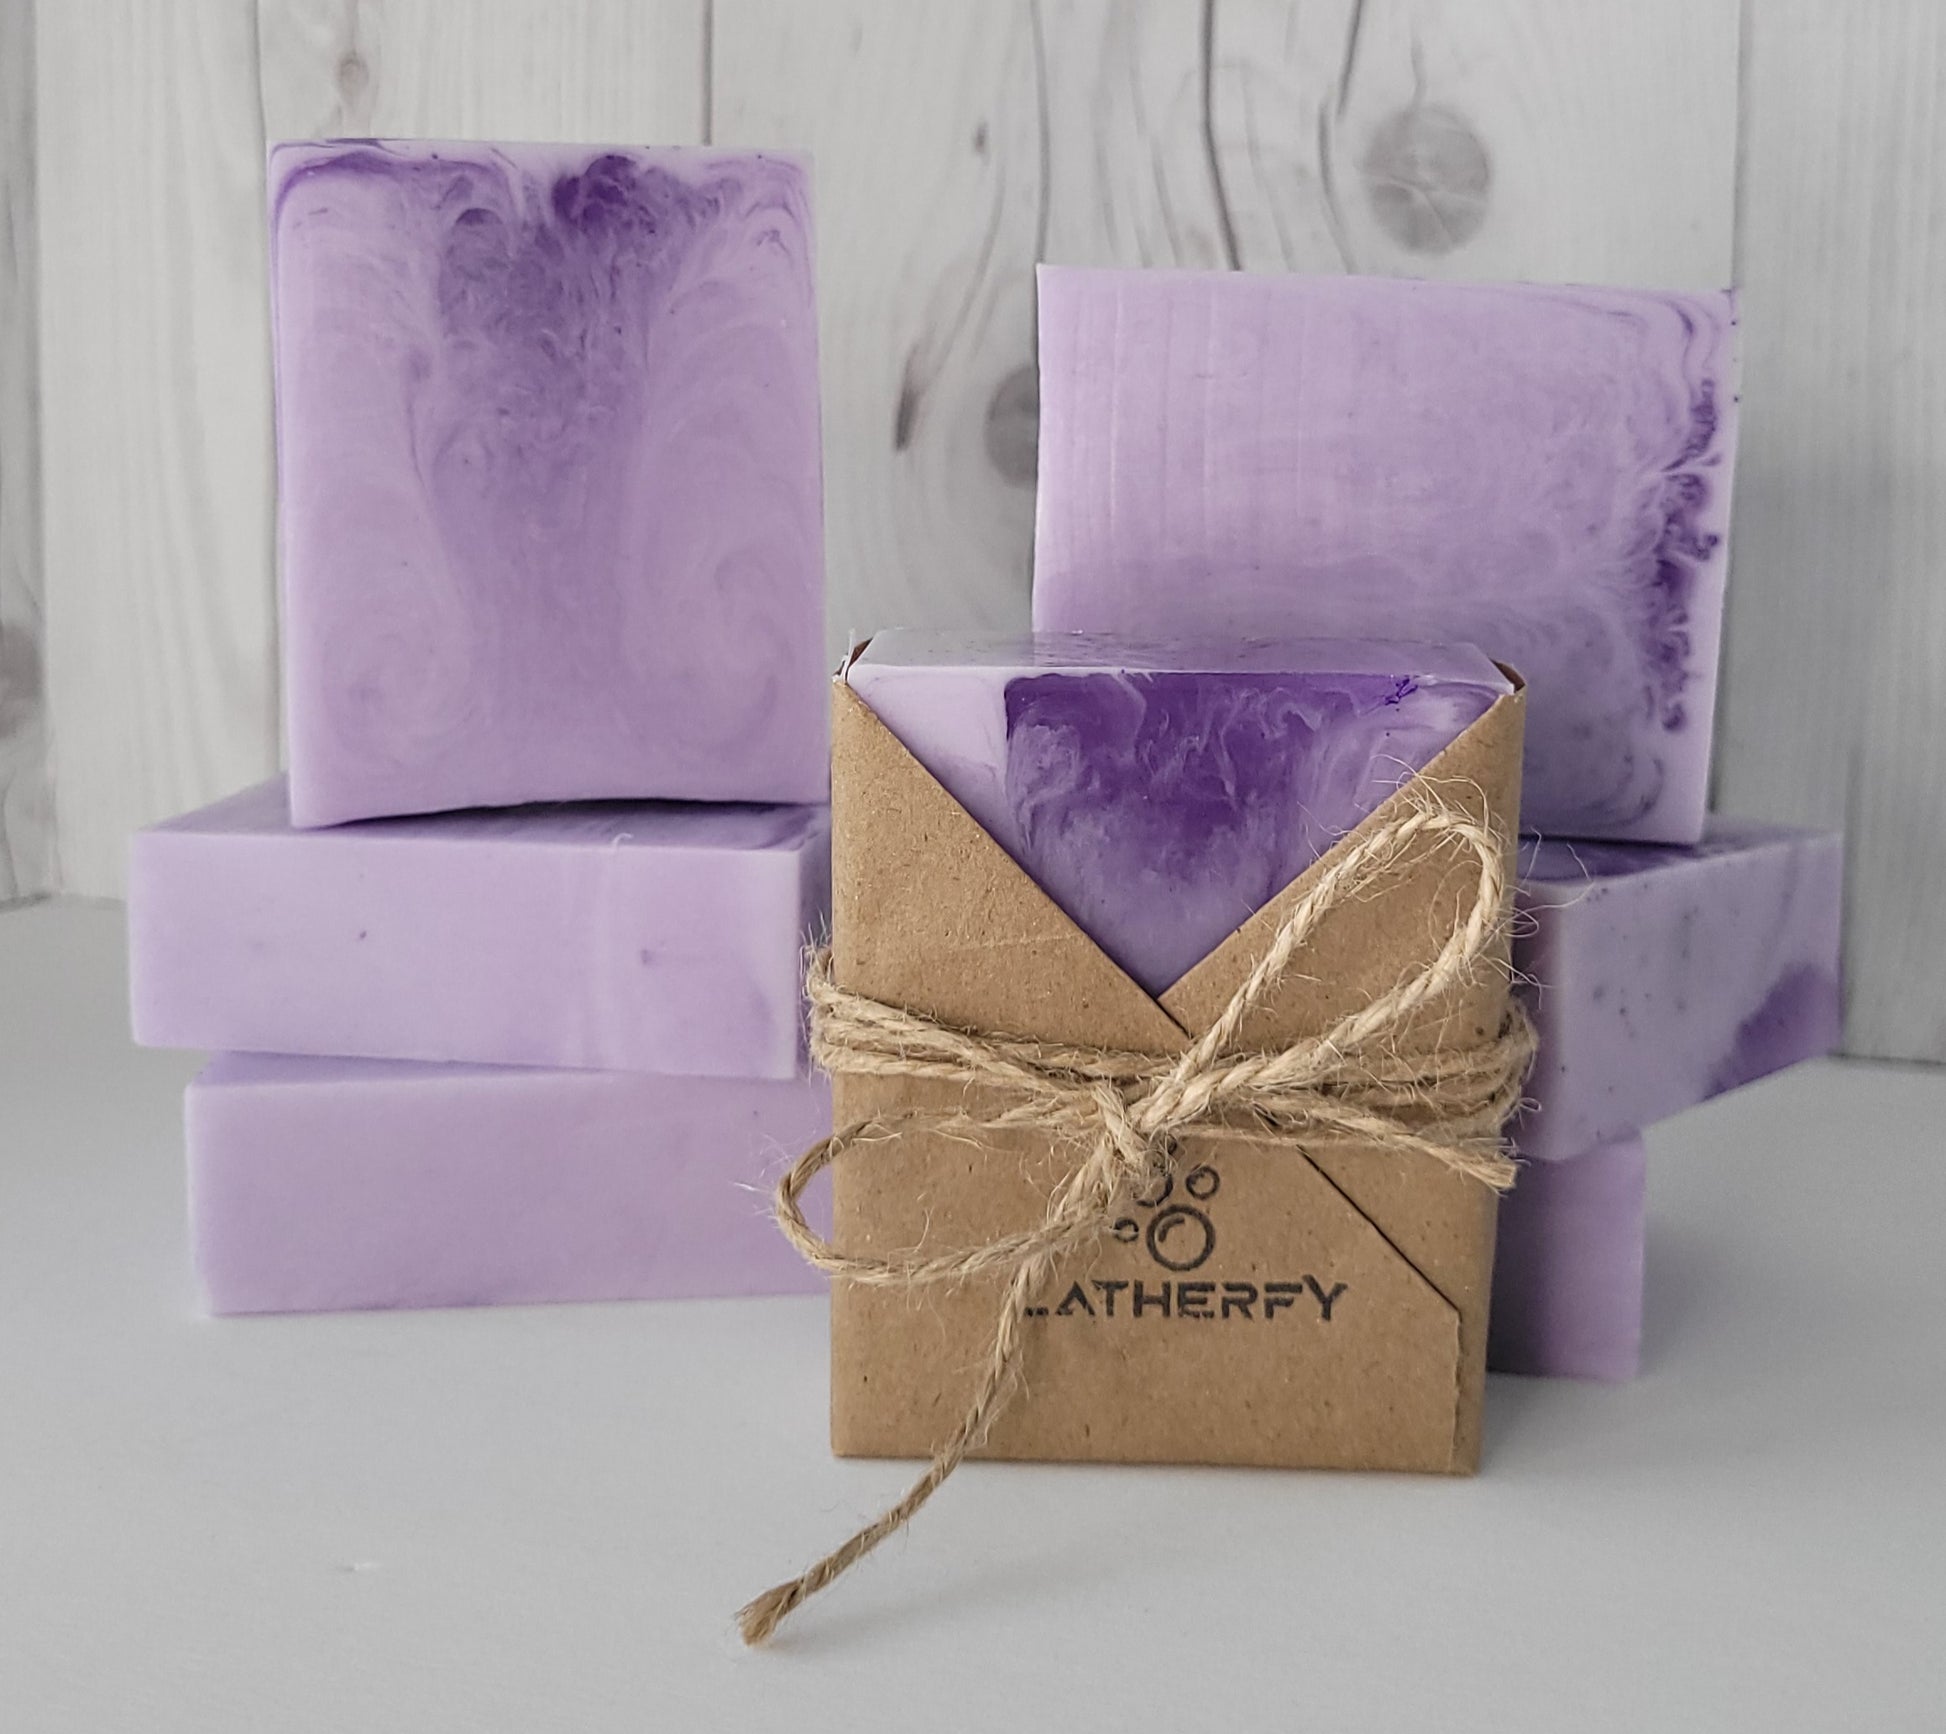 Lavender - Latherfy